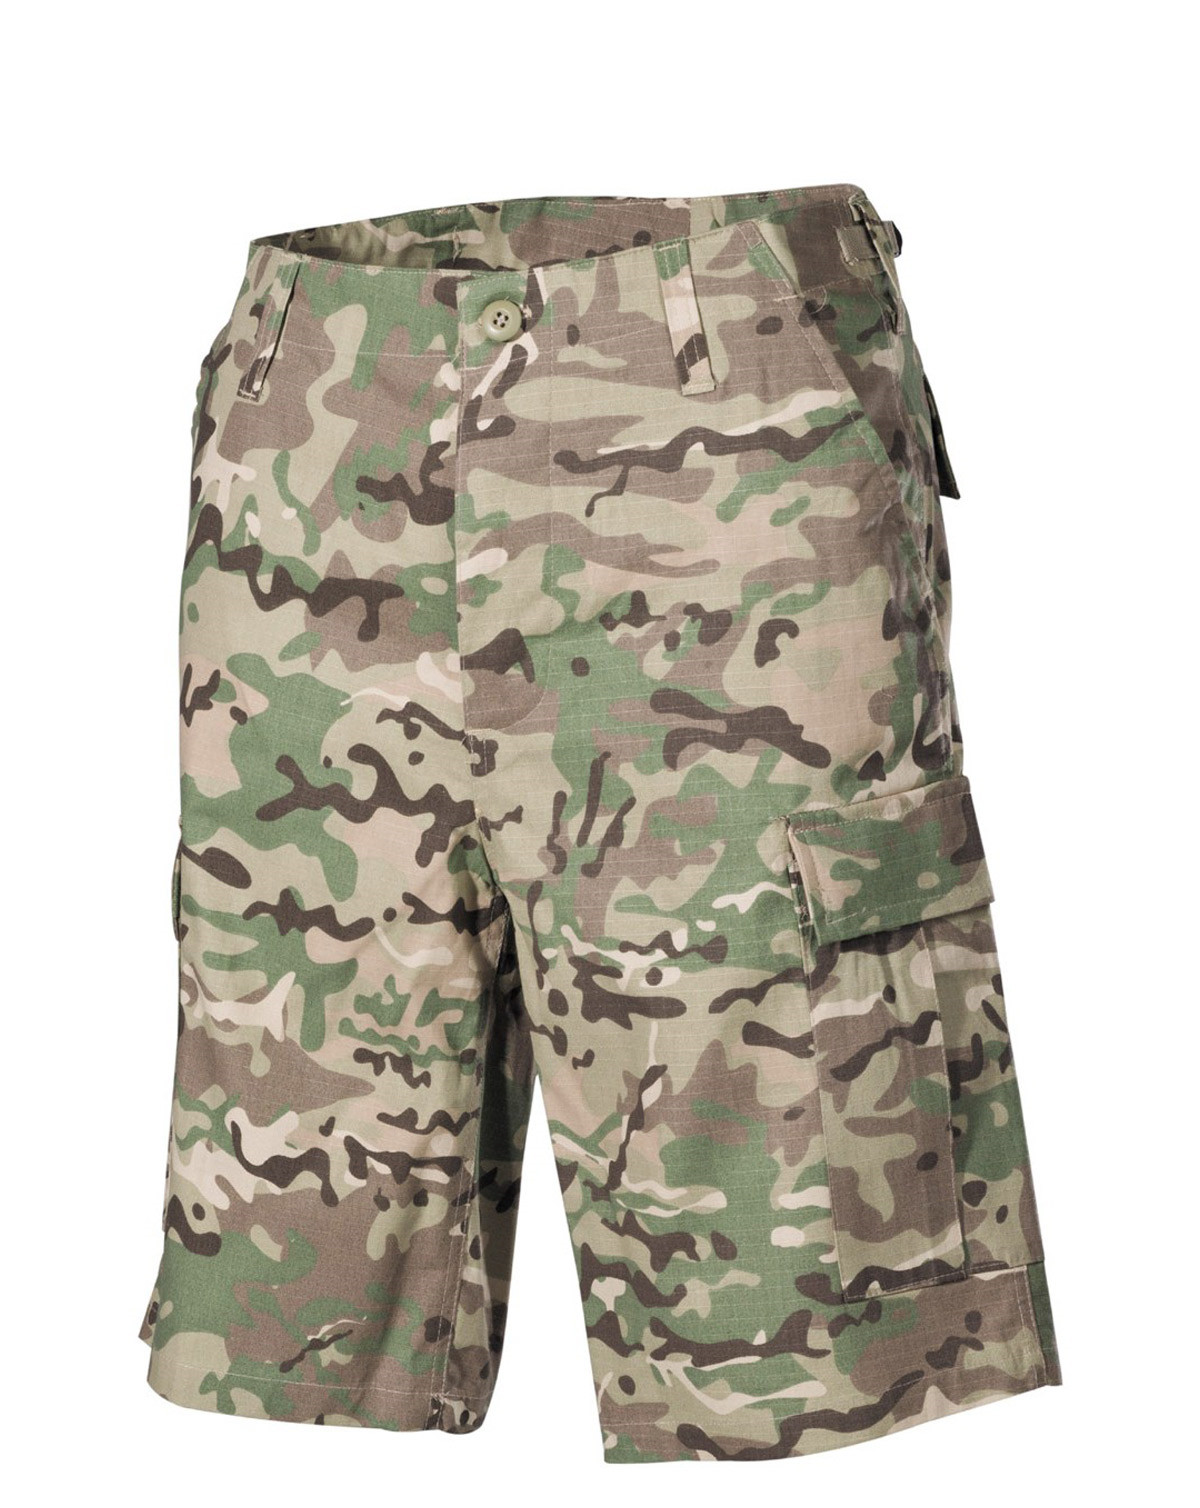 MFH U.S. BDU Bermuda shorts (Multi Camo, XL)